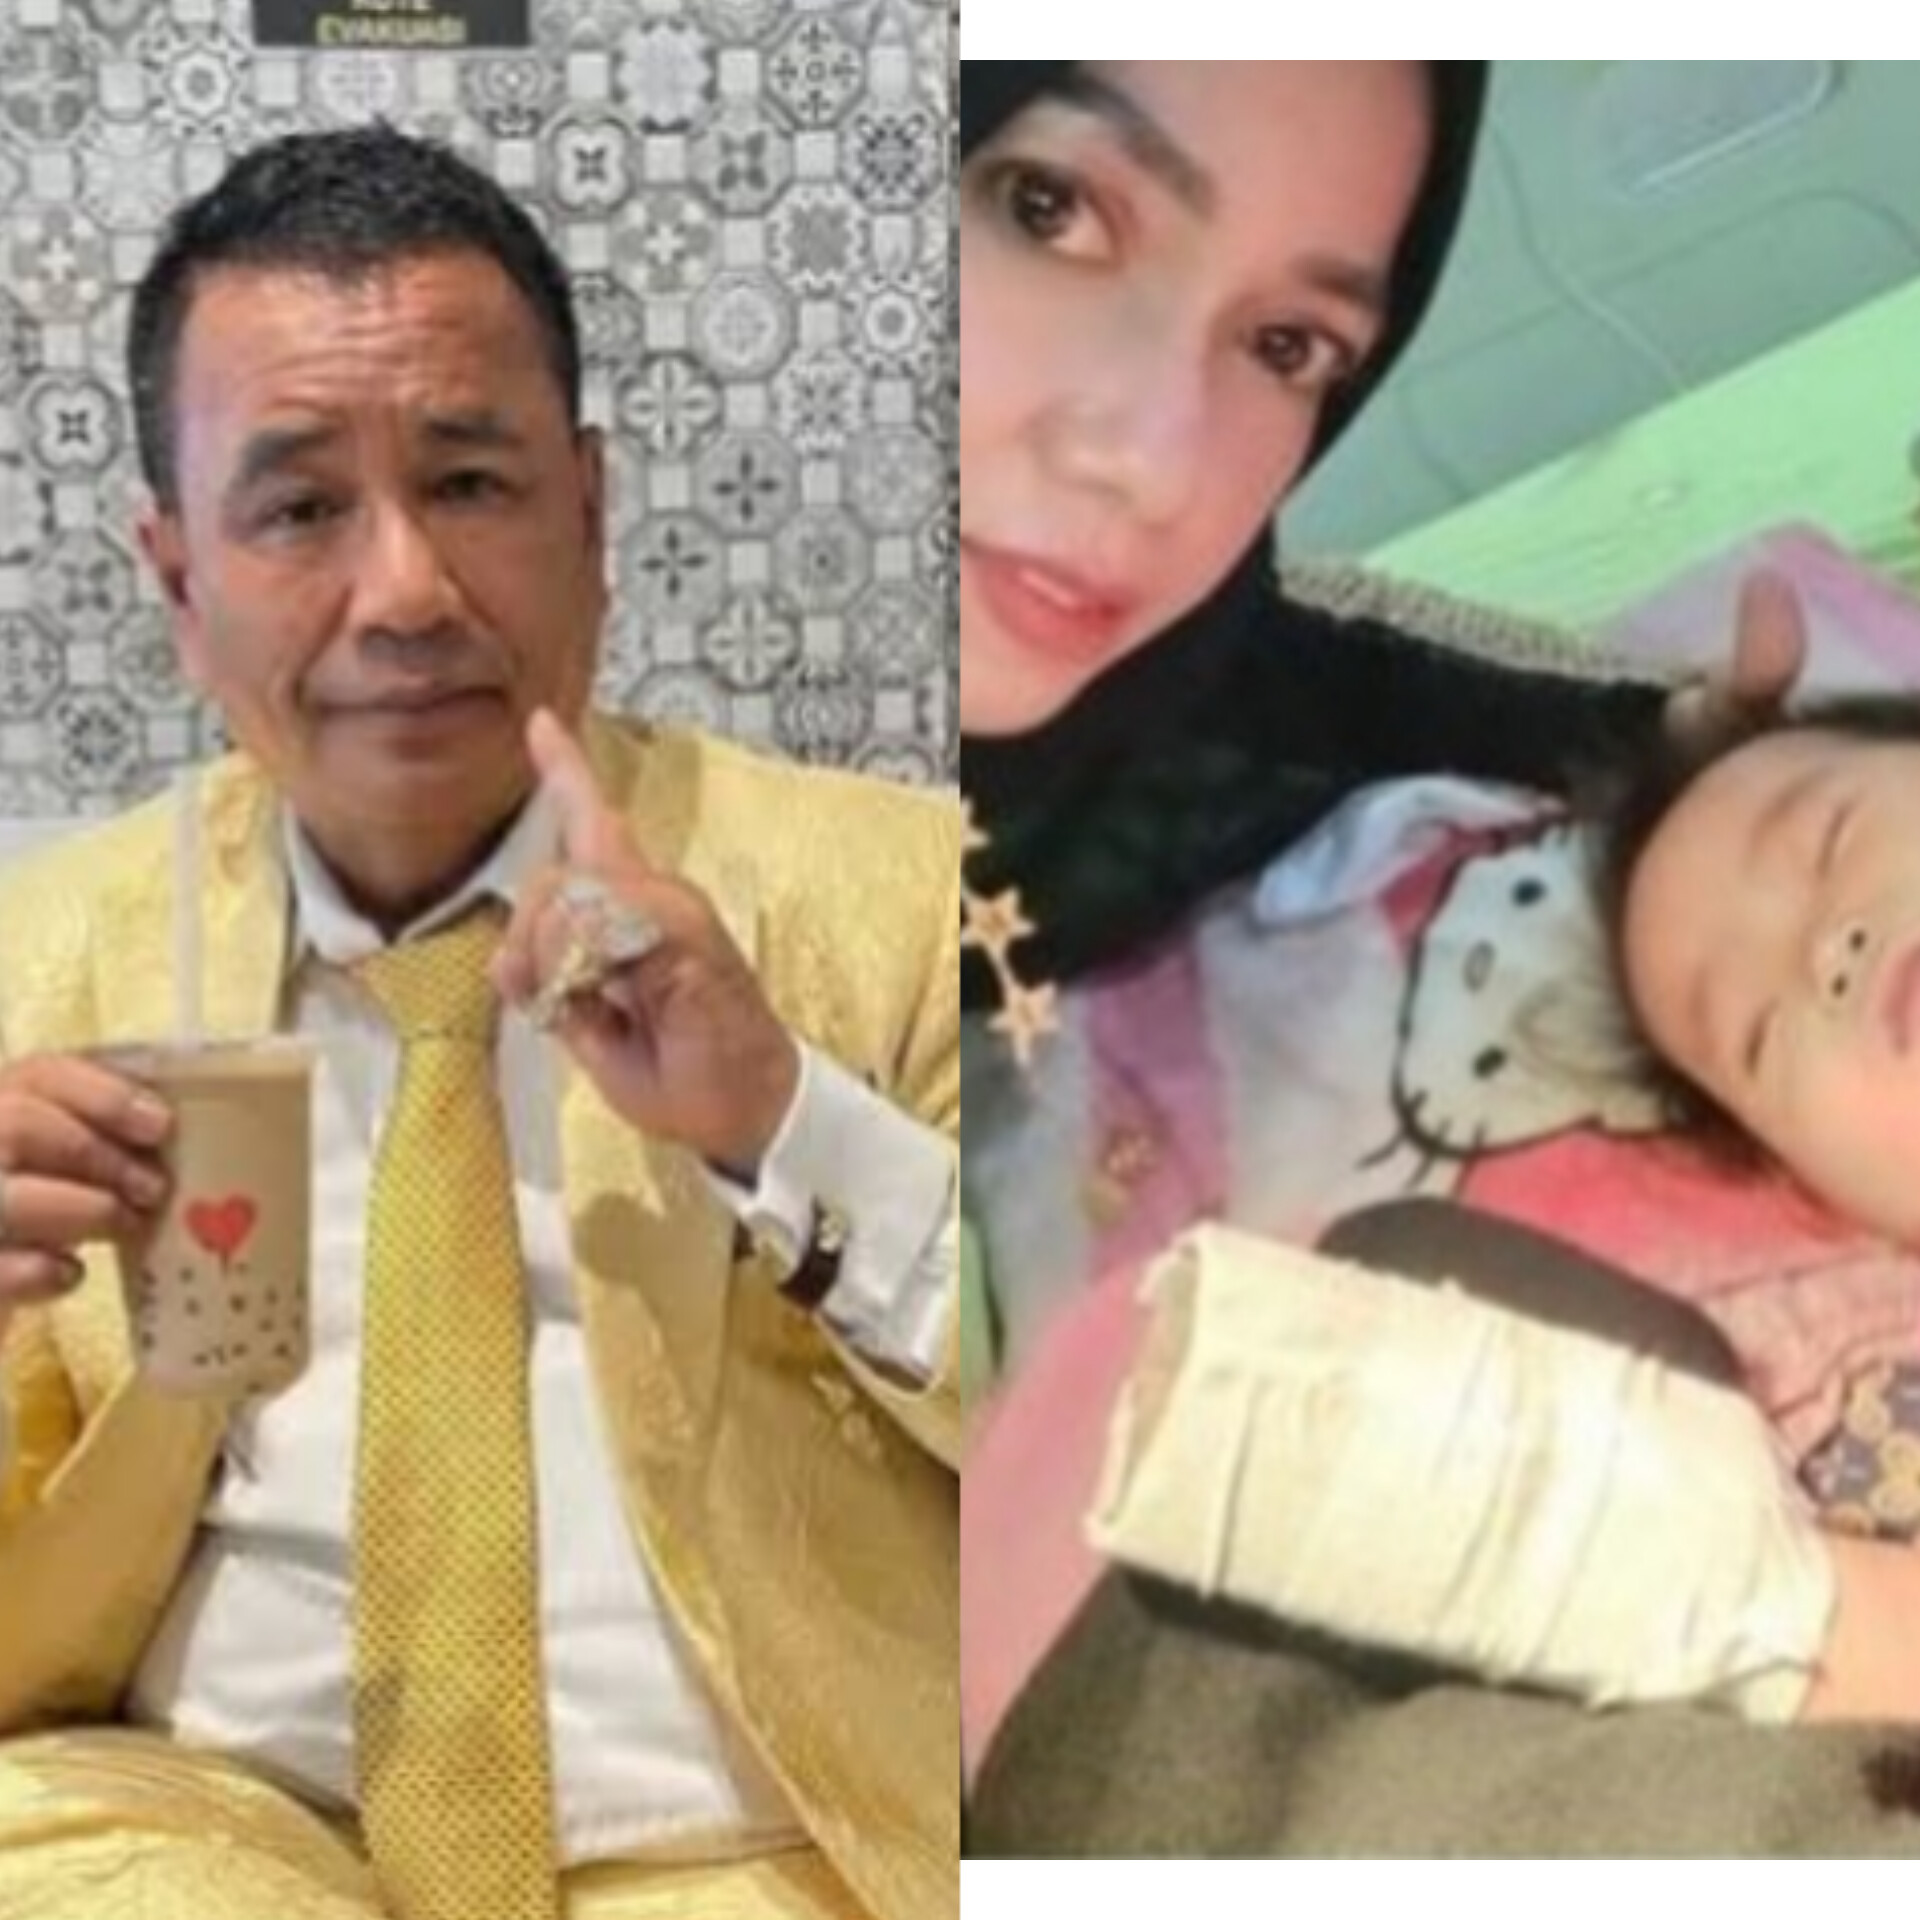 Hotman Paris Siap Temui Keluarga Bayi yang Kelingkingnya Digunting Oknum Perawat di Palembang